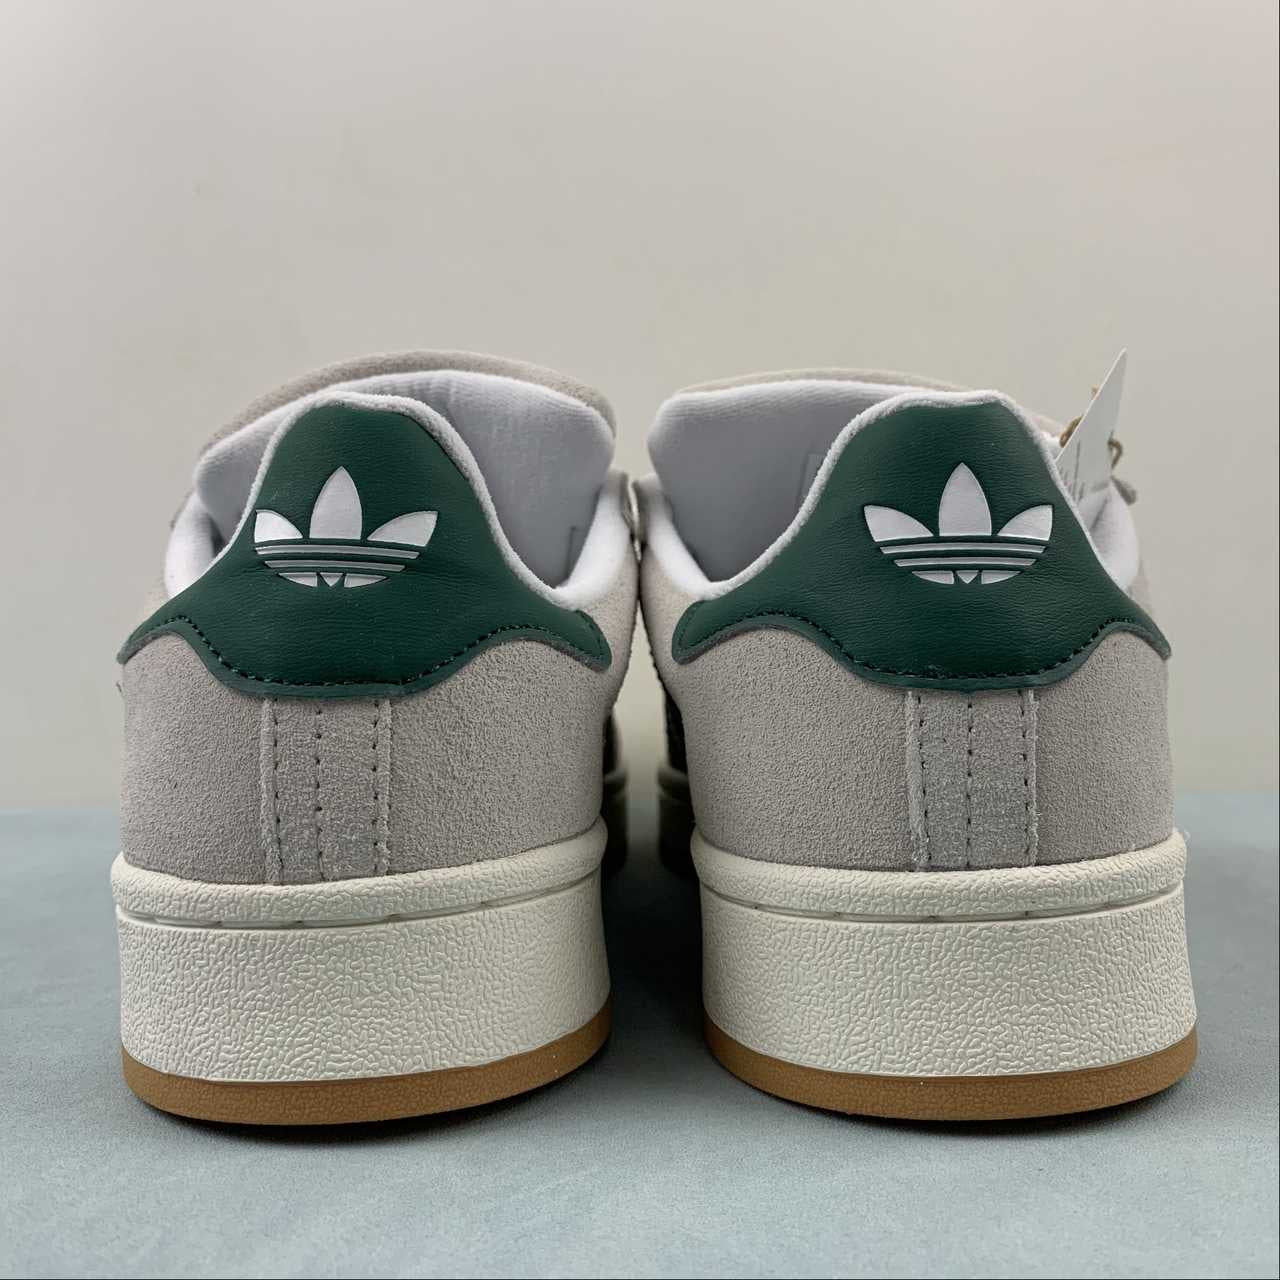 Chaussures Adidas Campus vert gris